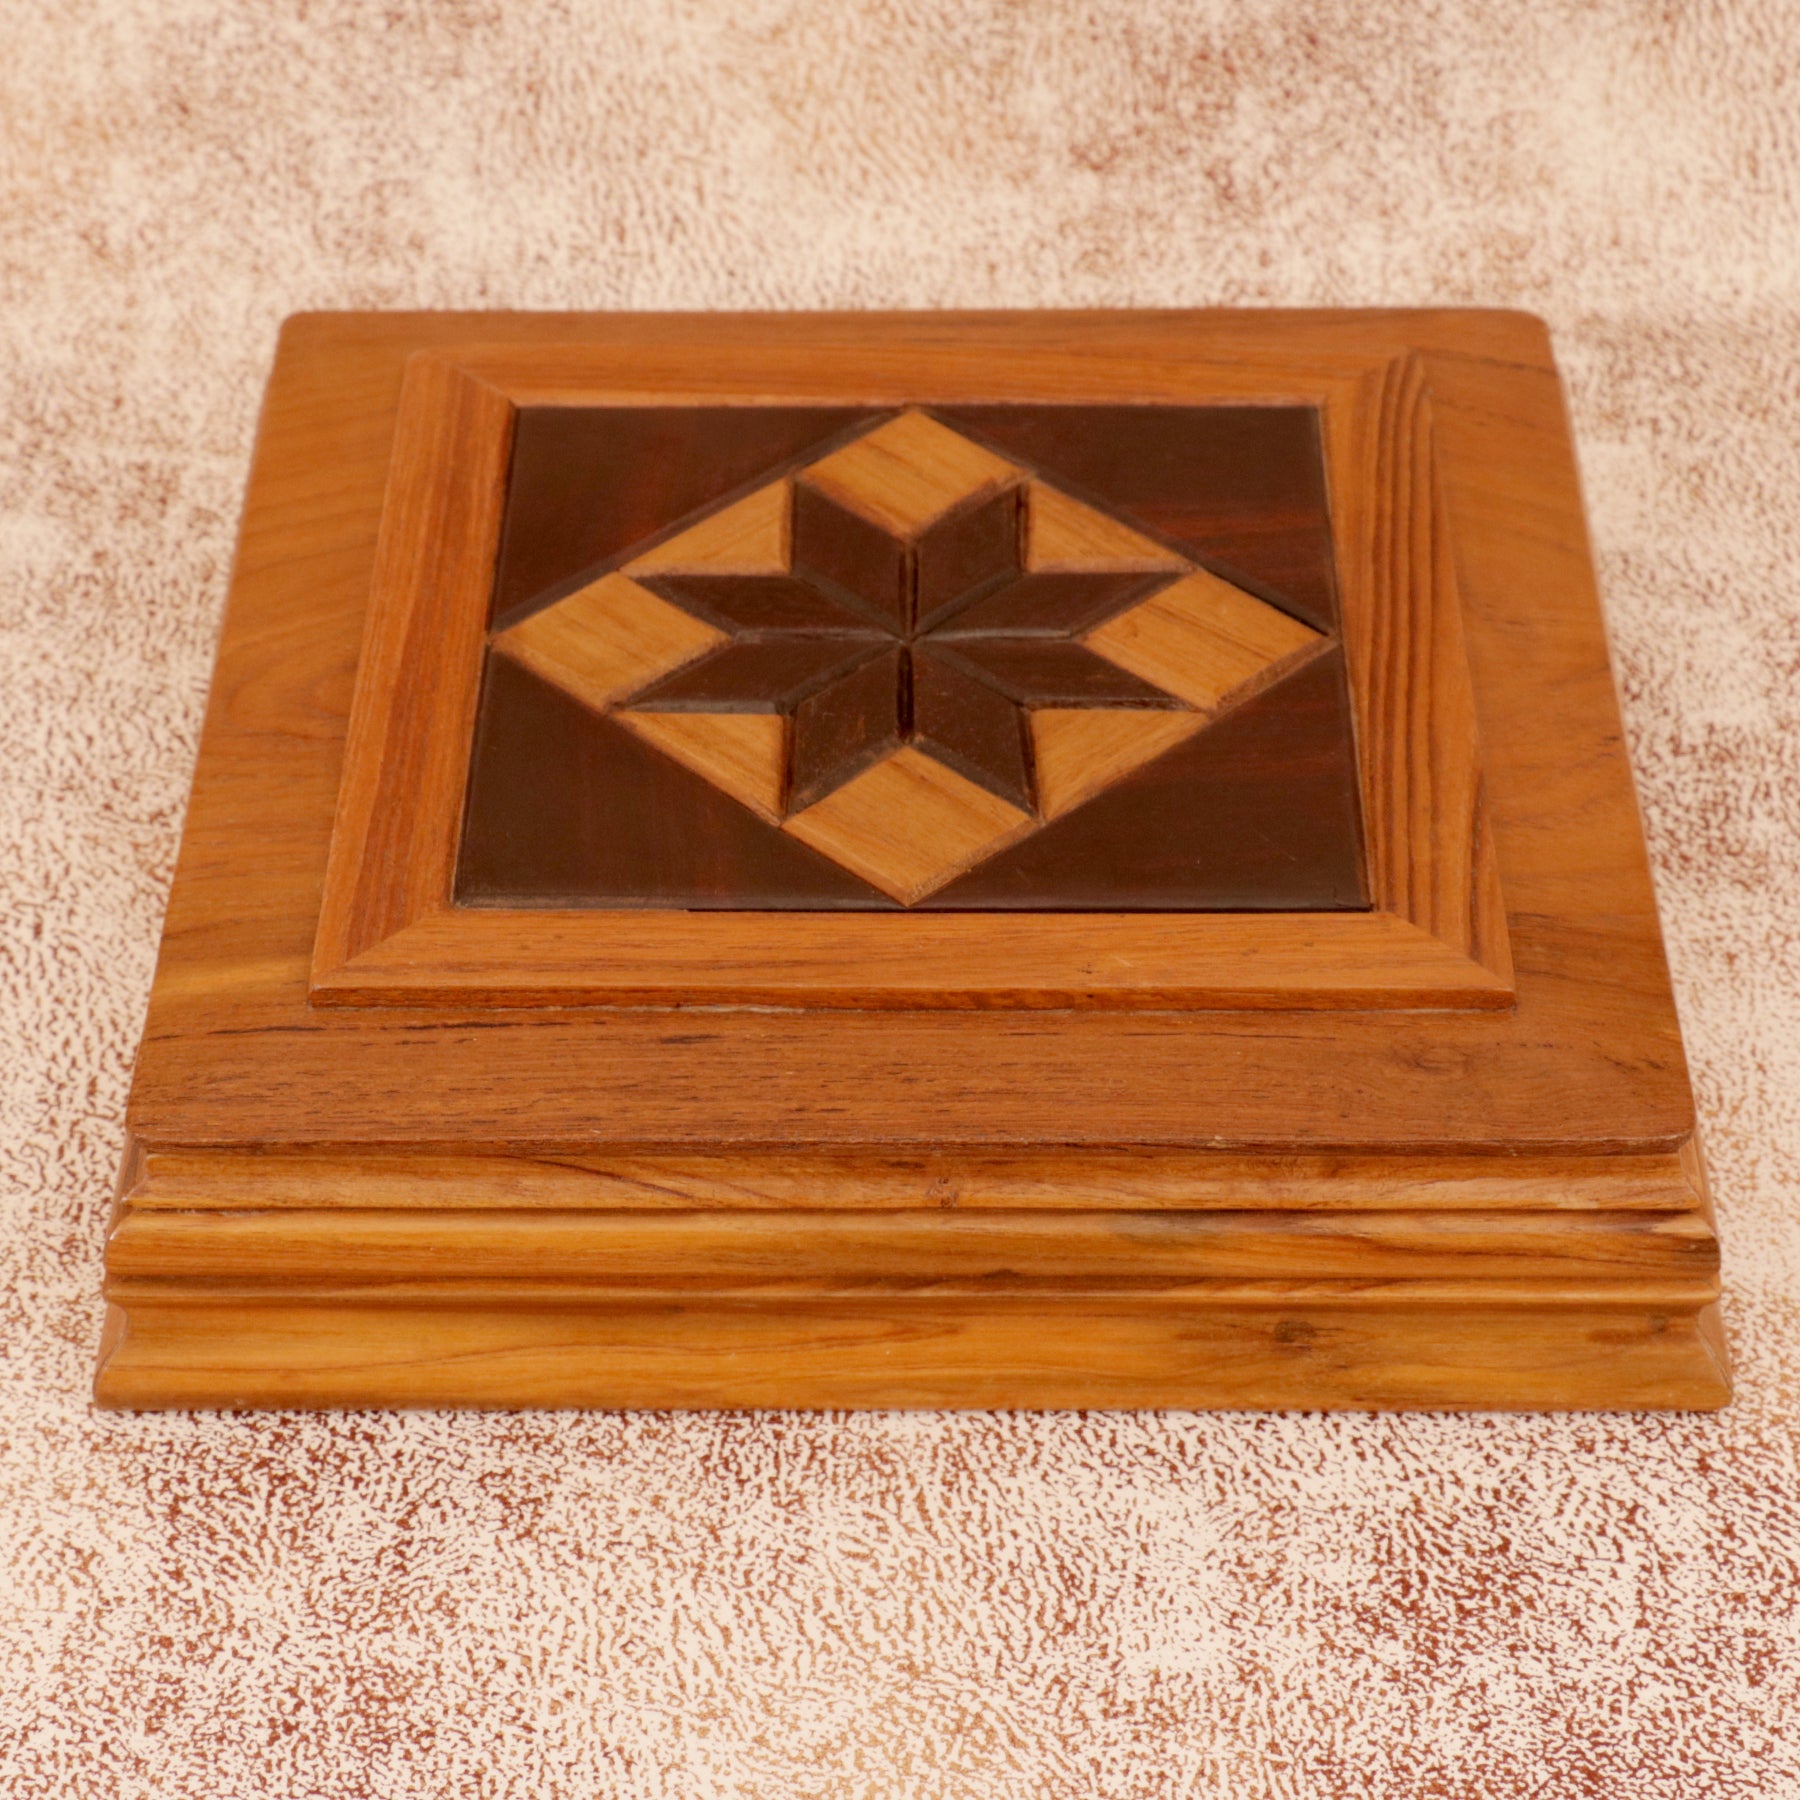 Square Star Box Wooden Box